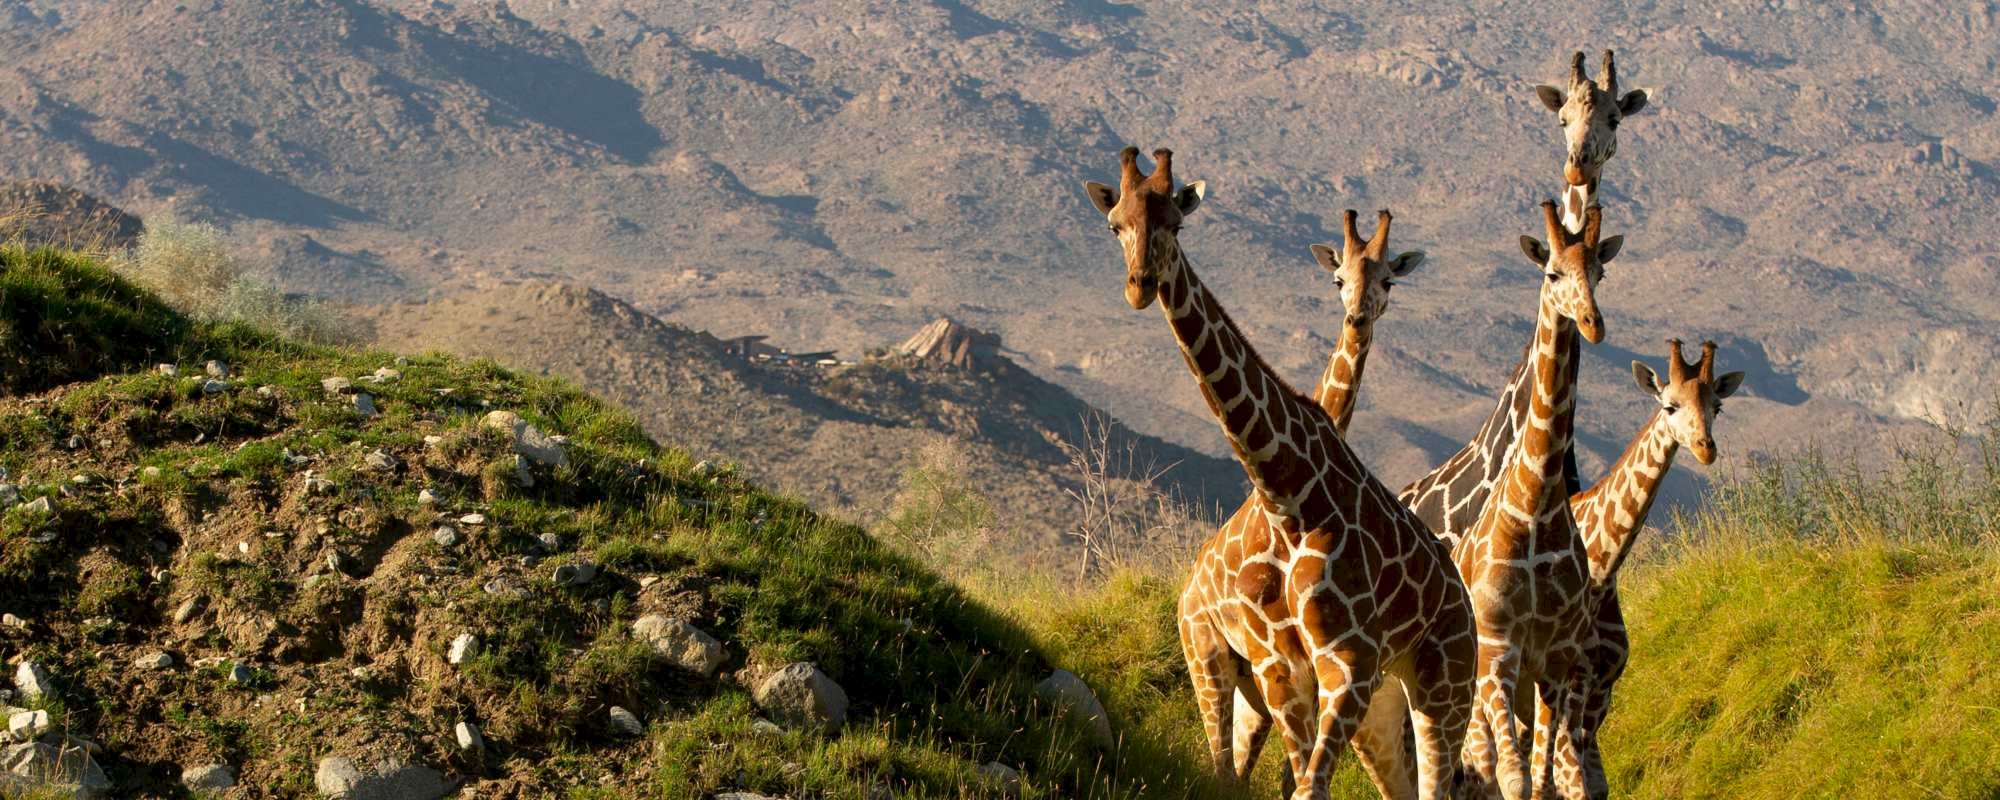 Celebrate World Giraffe Day at The Living Desert Zoo and Gardens.